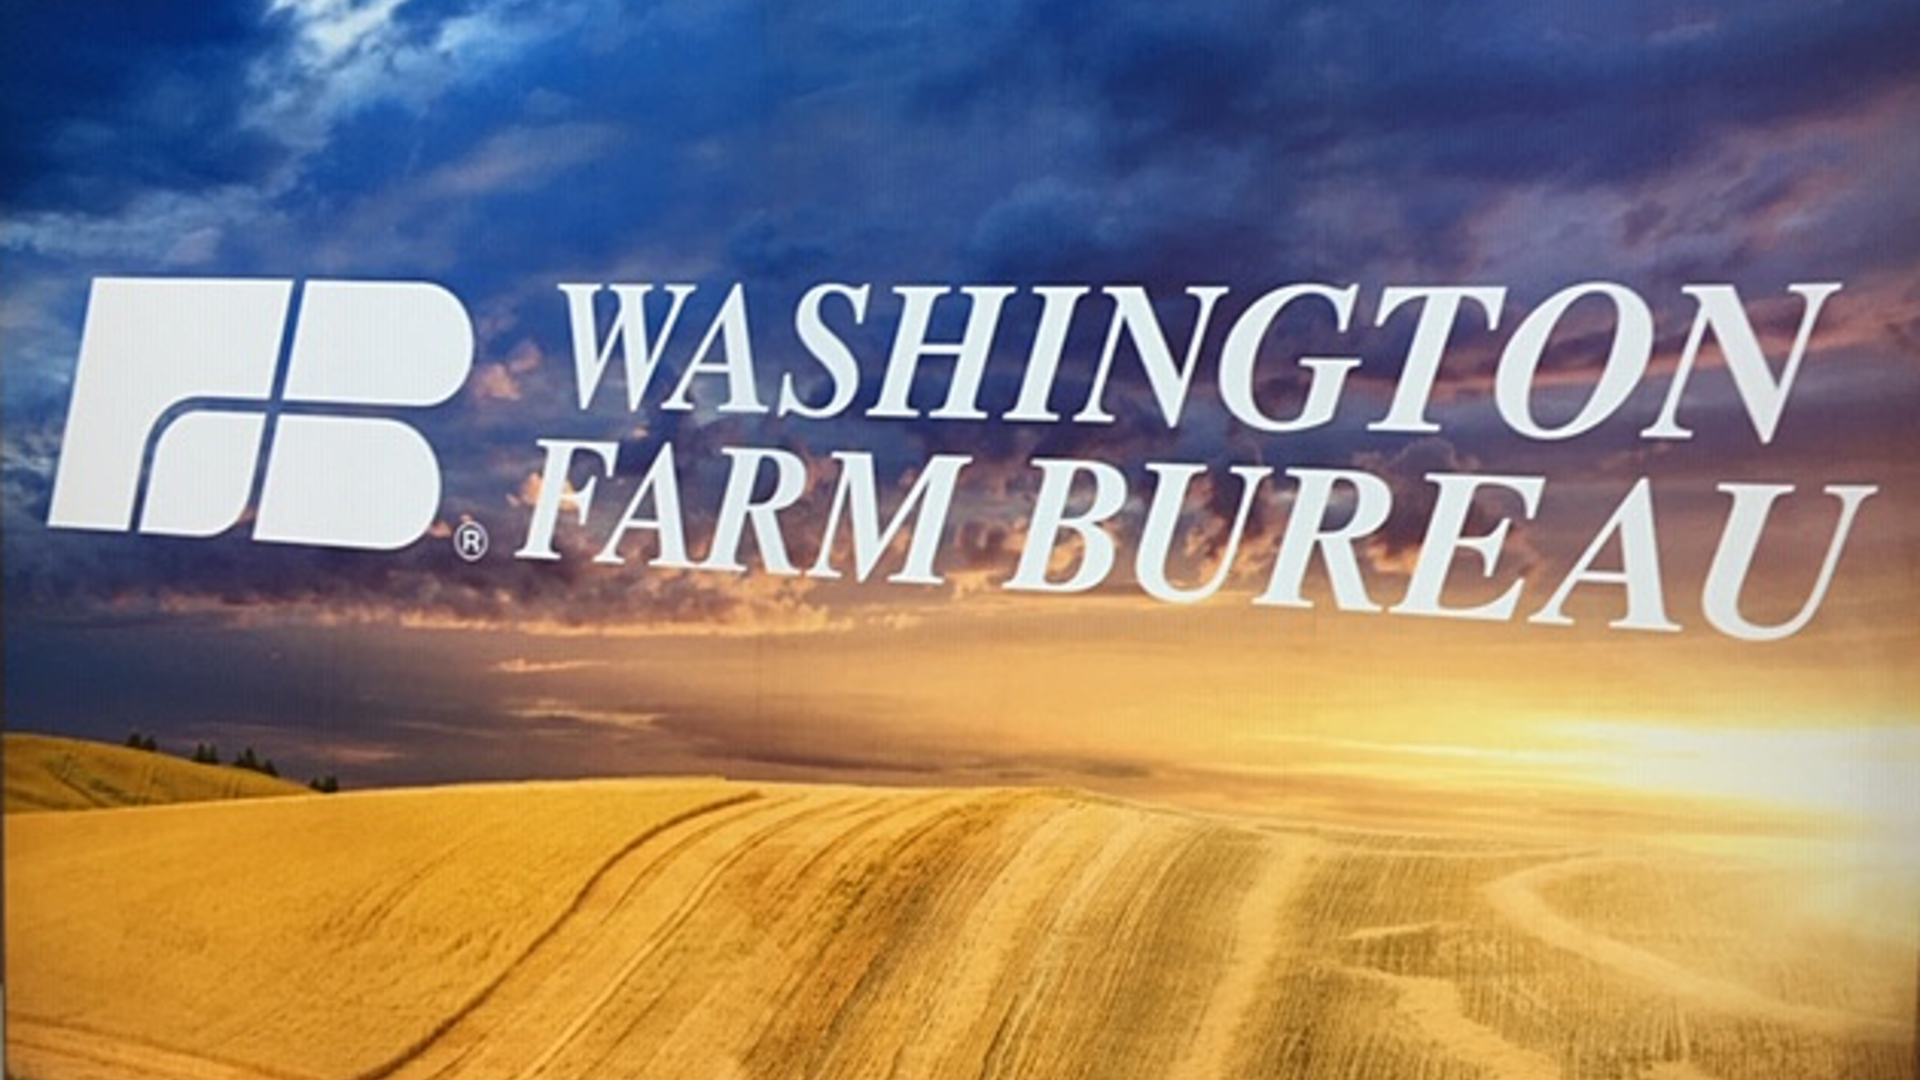 Farm Bureau Policy Pt 1